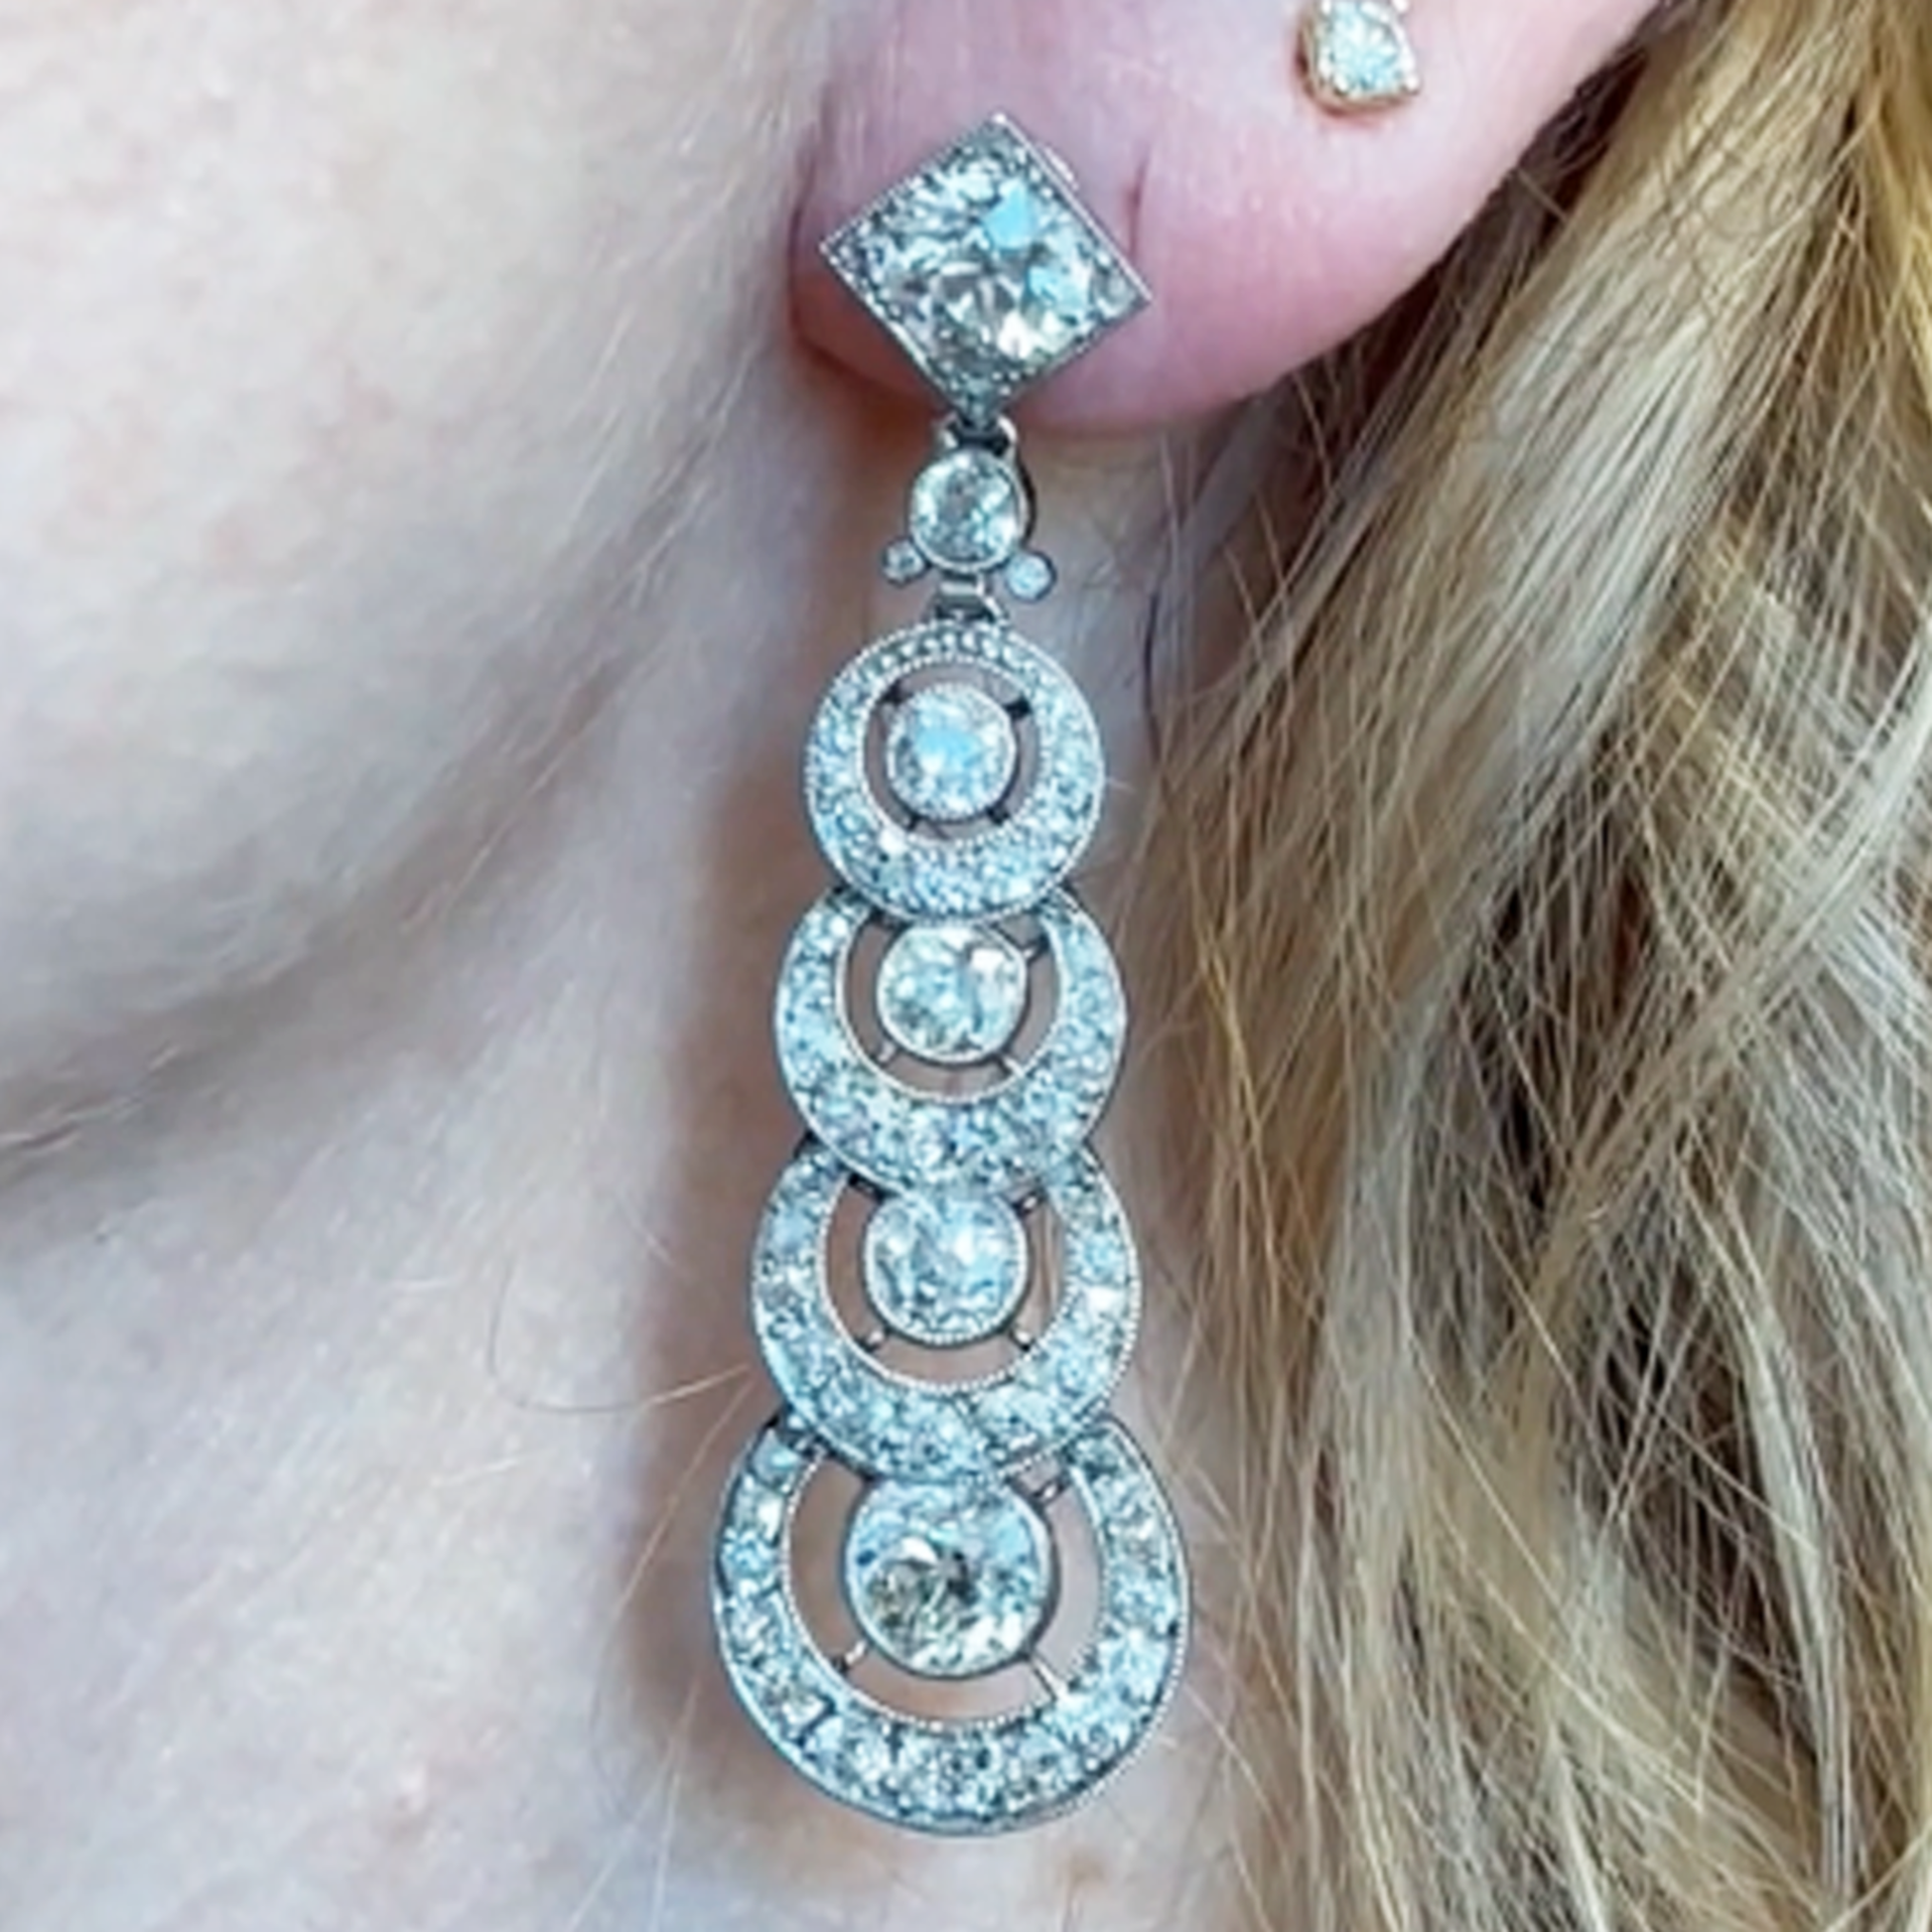 Cartier Paris Art Deco Platinum Diamond Earrings on ear